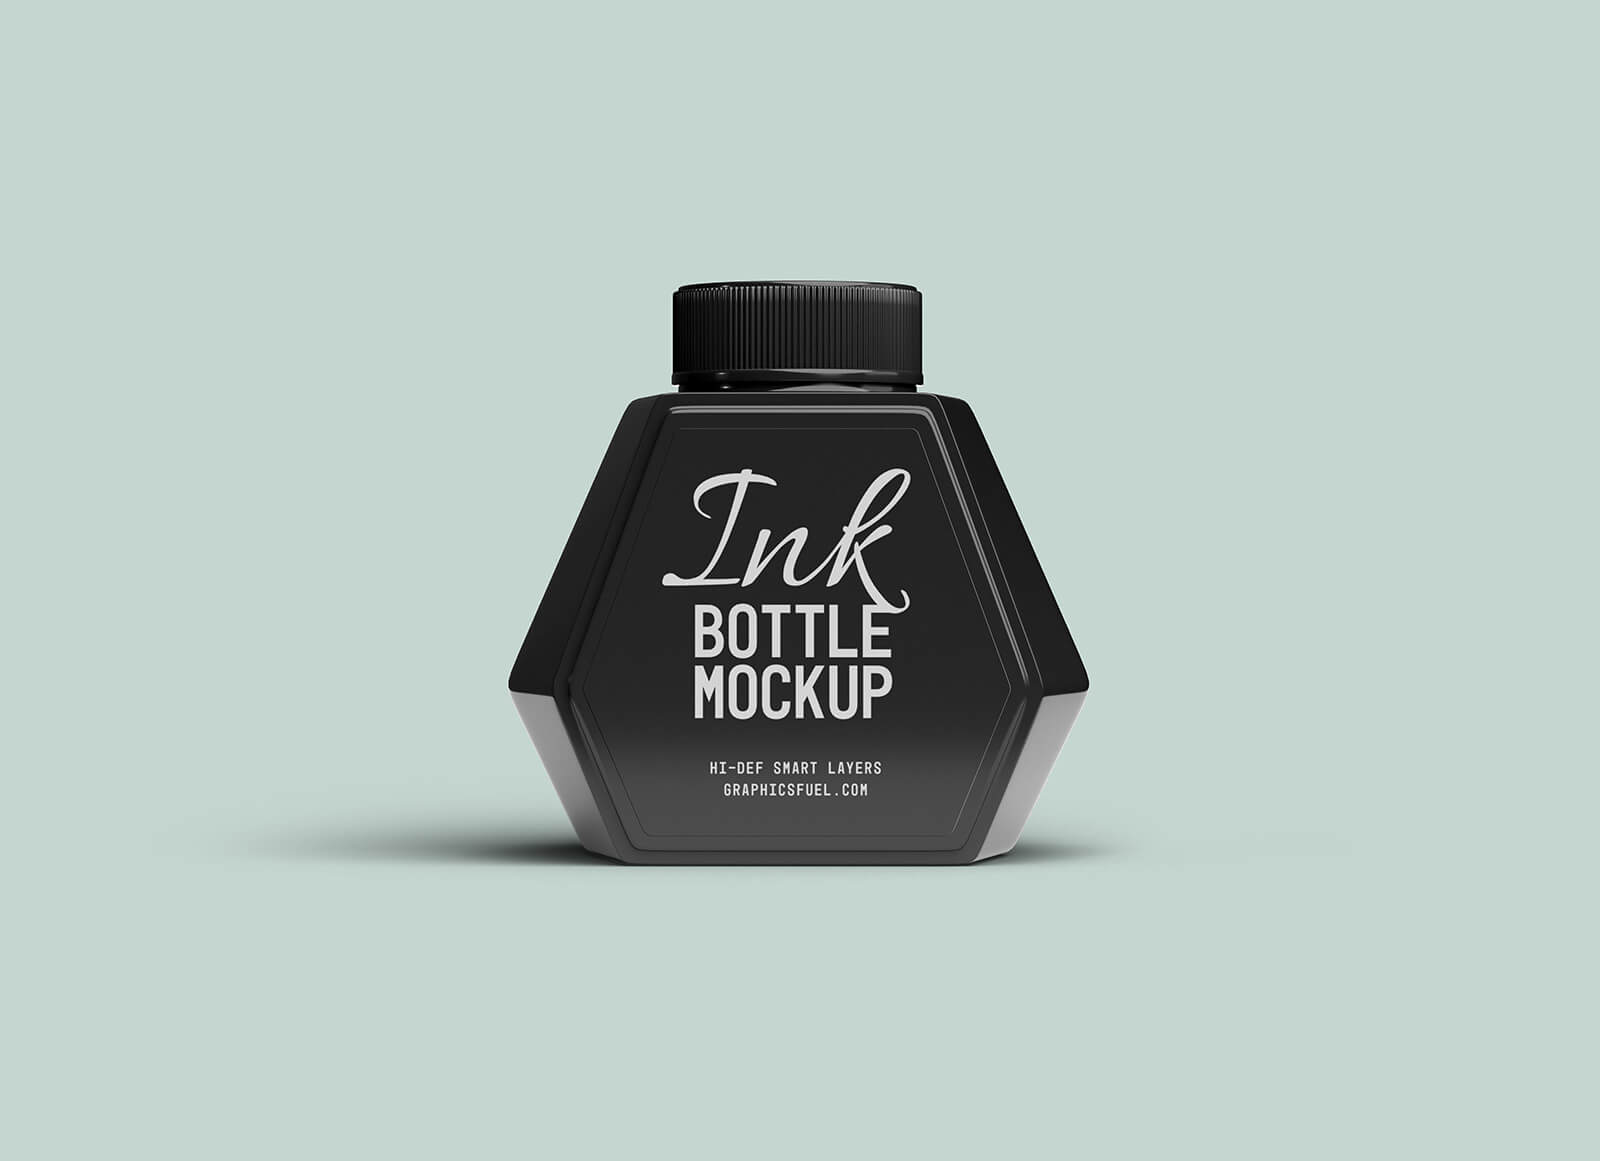 Free-Ink-Pot-Bottle-Mockup-PSD